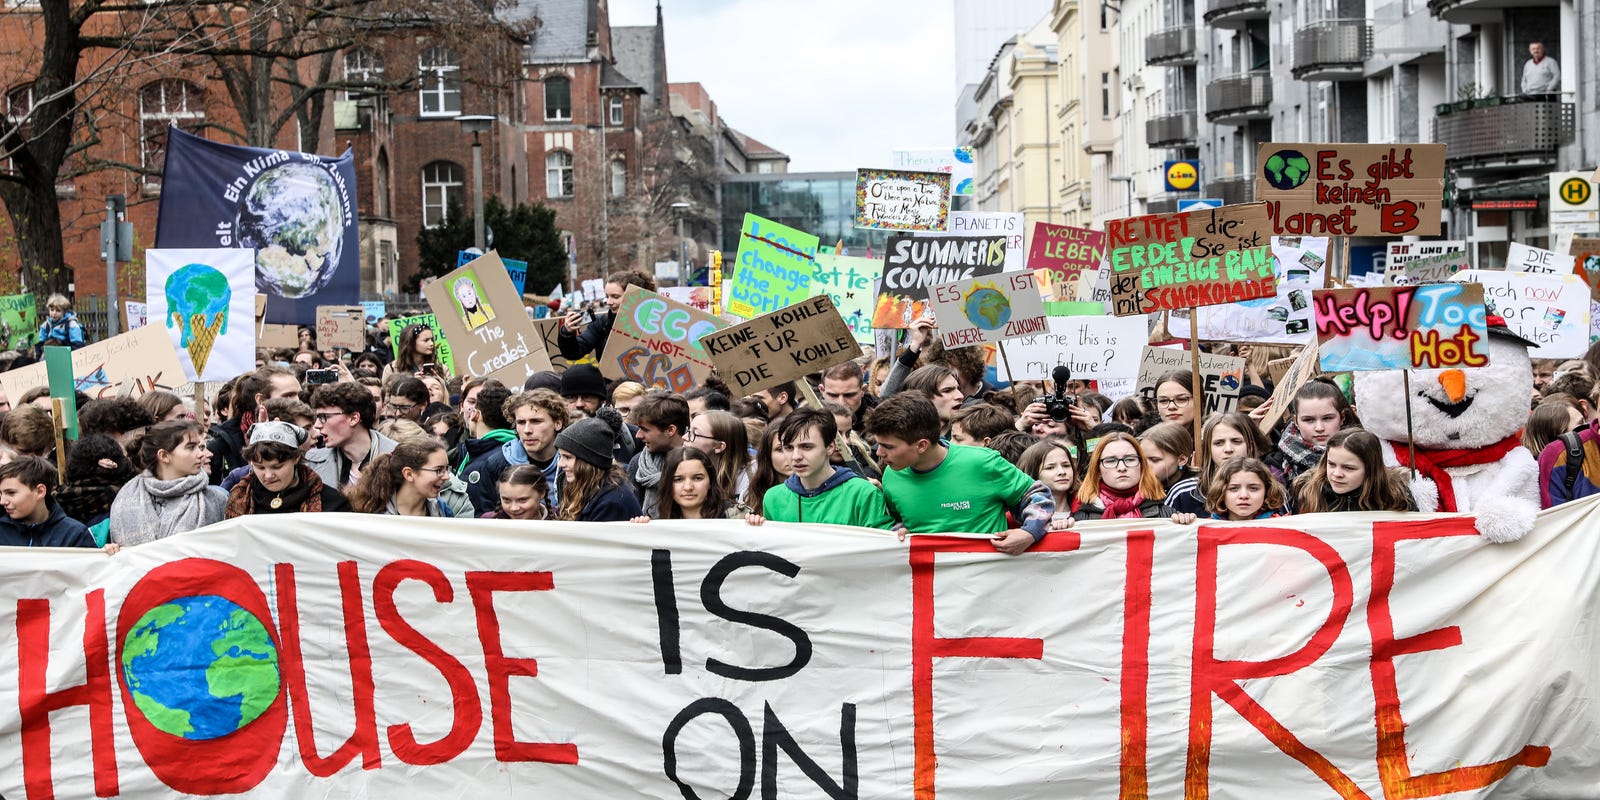 købmand Drik Thicken Generation Z poised to change US politics with climate change activism